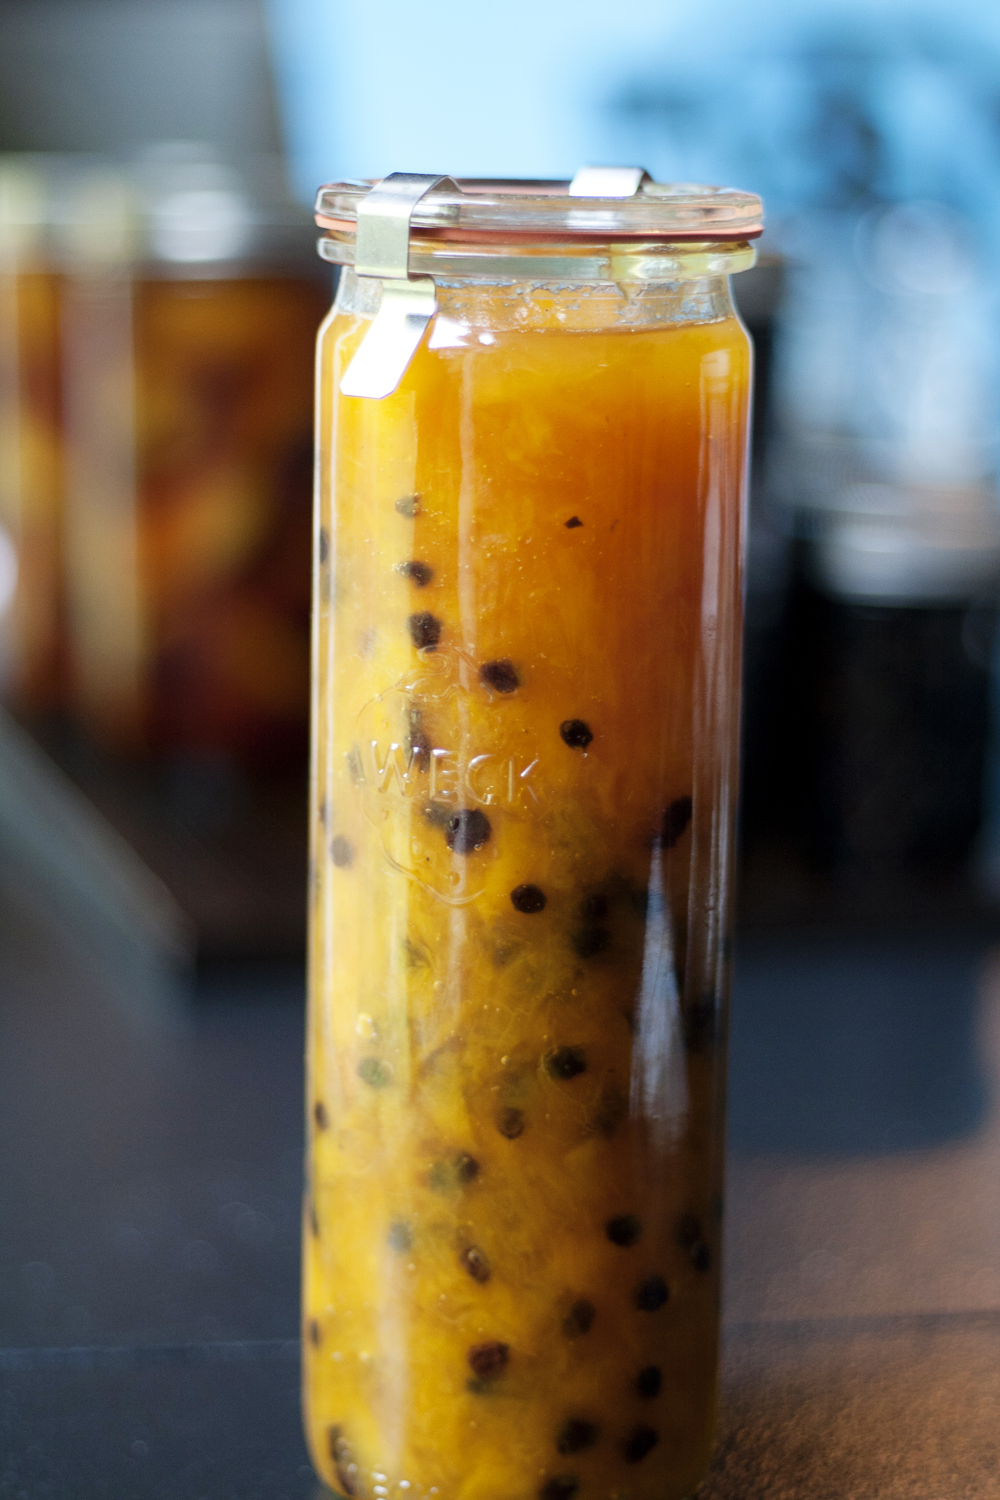 Georgia Peach Jam Recipe with Dried Currants by Homespun ATL | Chef Jason Jimenez | Atlanta, GA